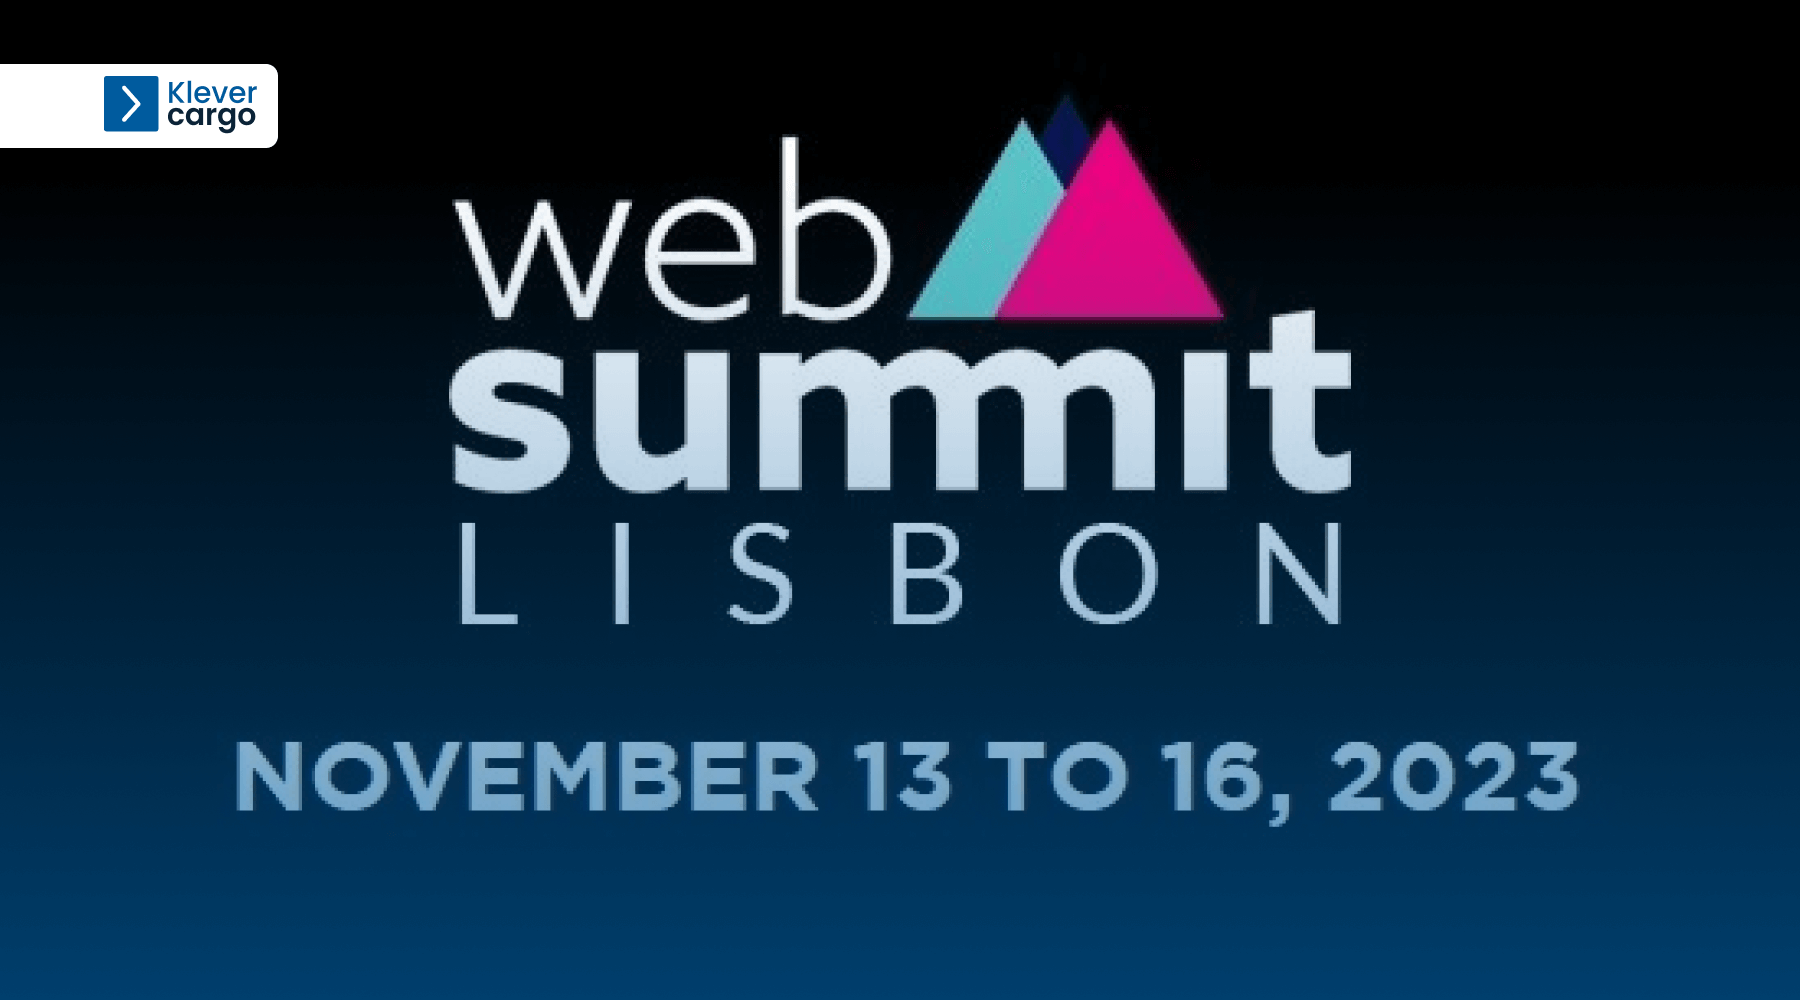 web summit lisbon 